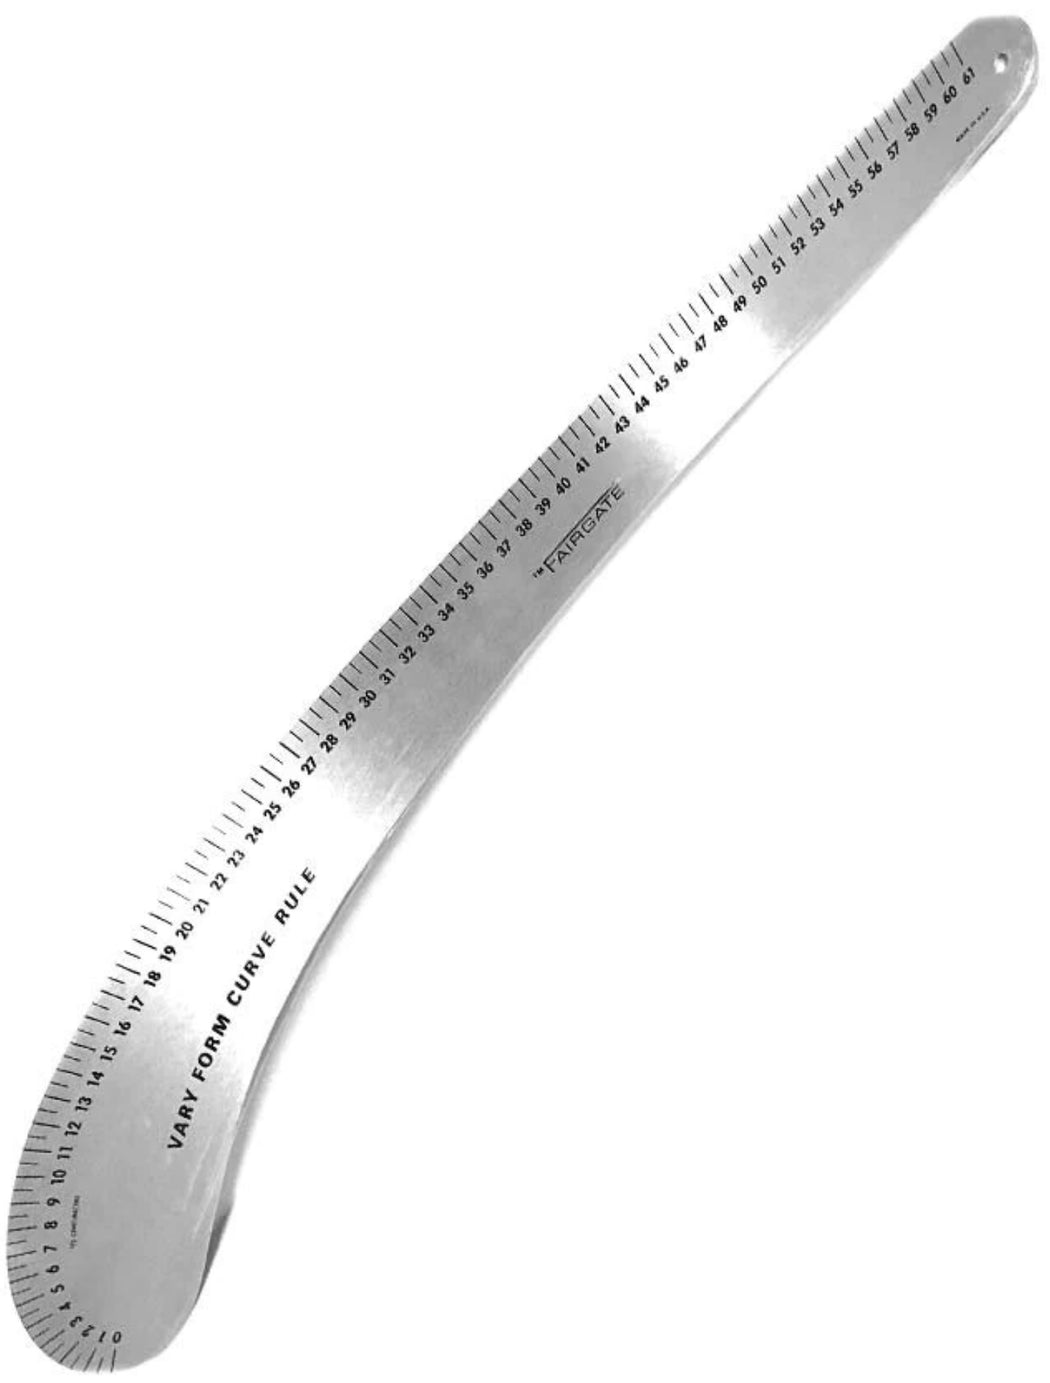 Vary Form Curve - Zipper and Thread